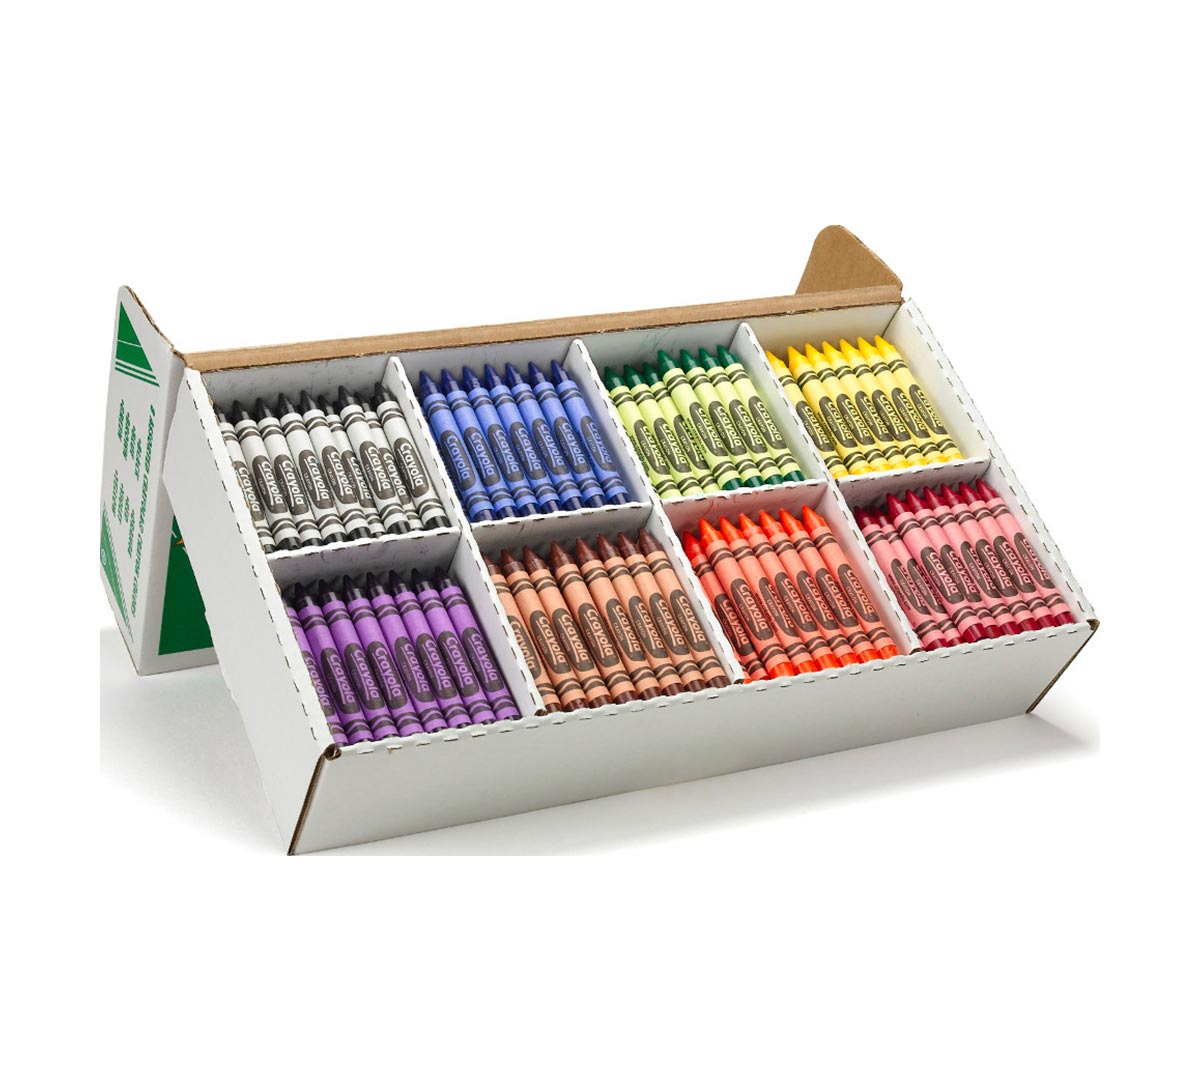 Crayola® Crayon Classpack®, Set of 800